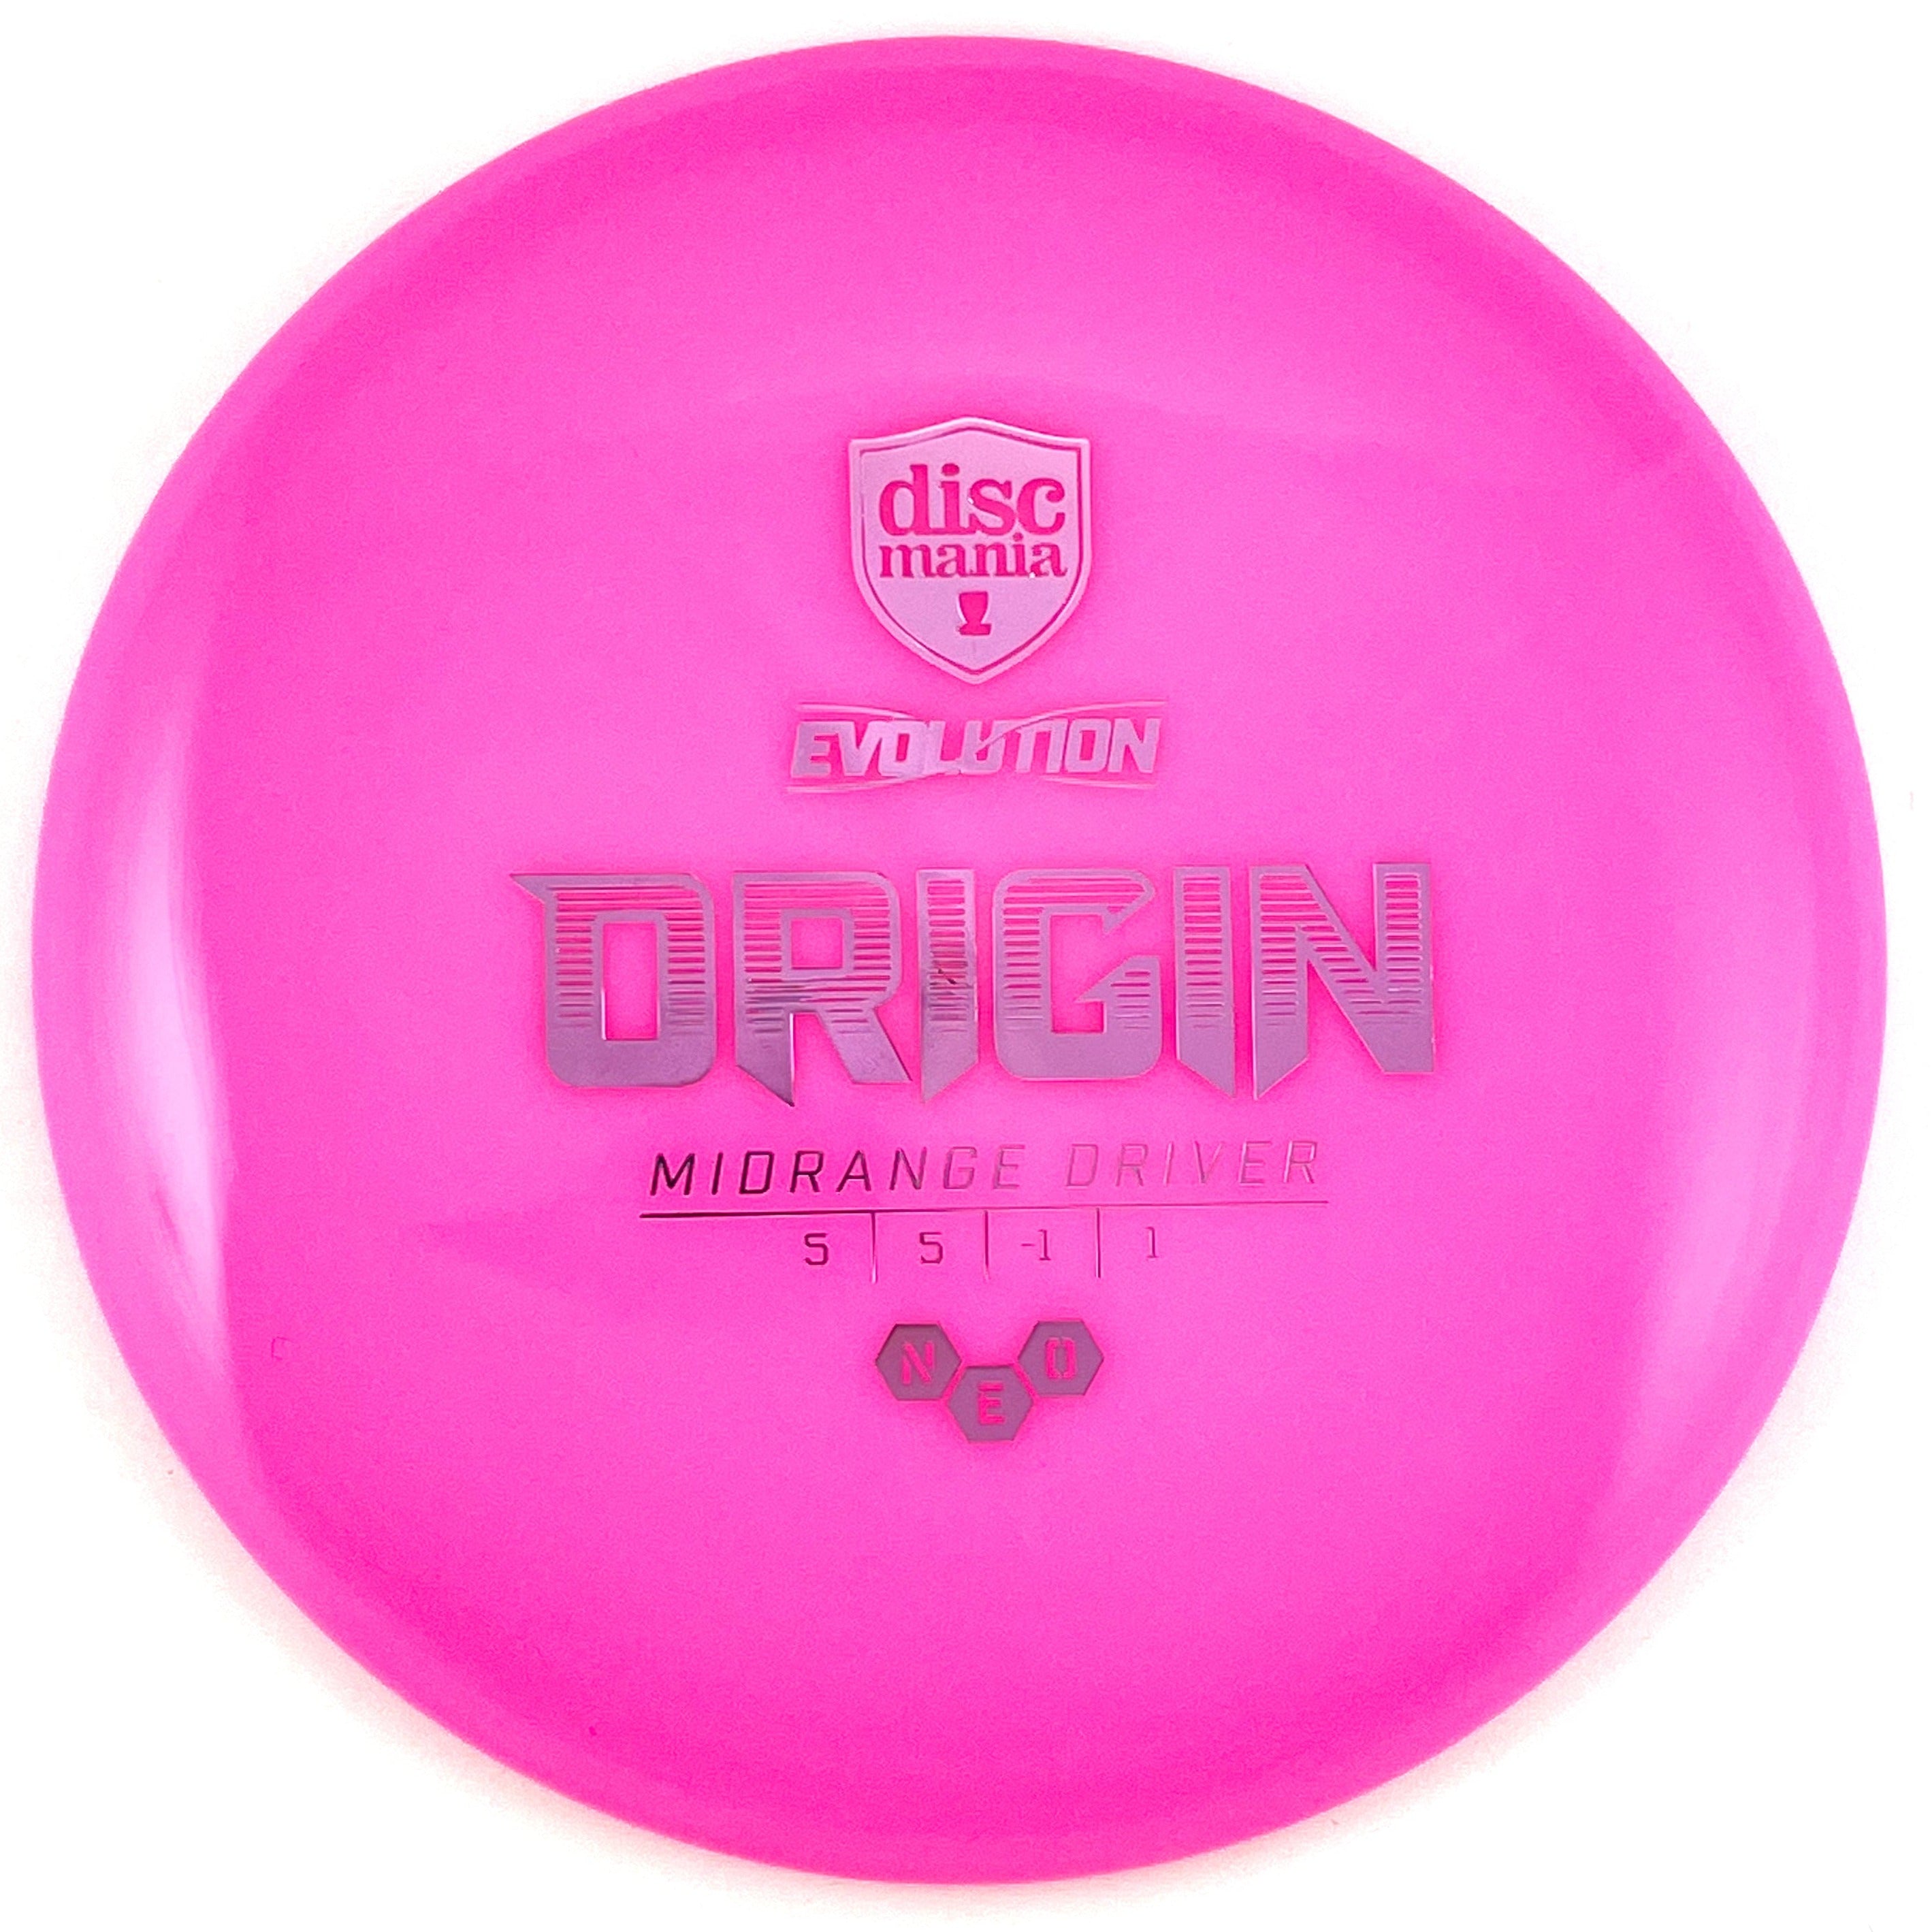 Discmania Origin disc golf midrange disc by Discmania Golf Discs.